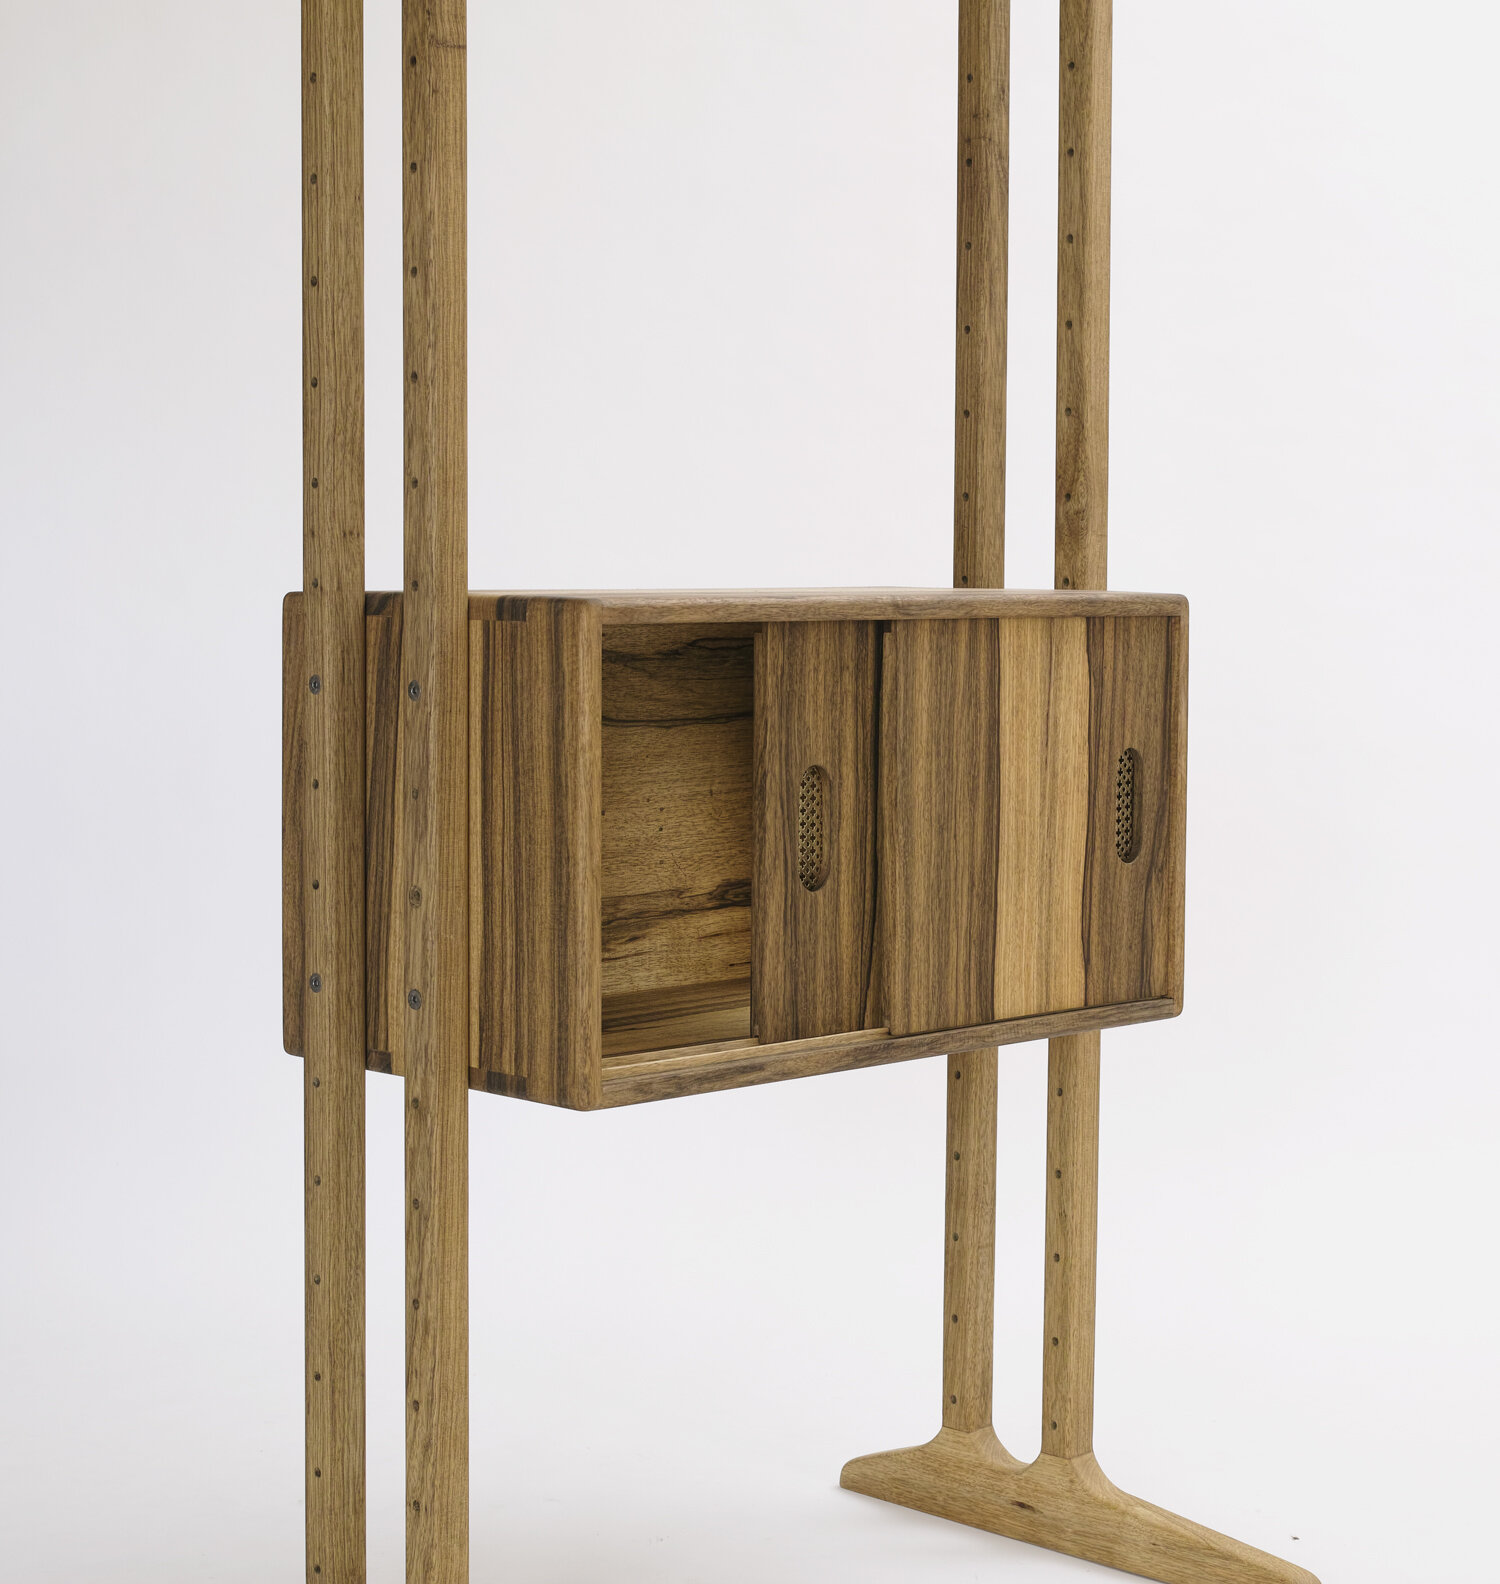 trestle-shelves-brass-metal-and-wood-furniture-design-lebanon-beirut.jpg